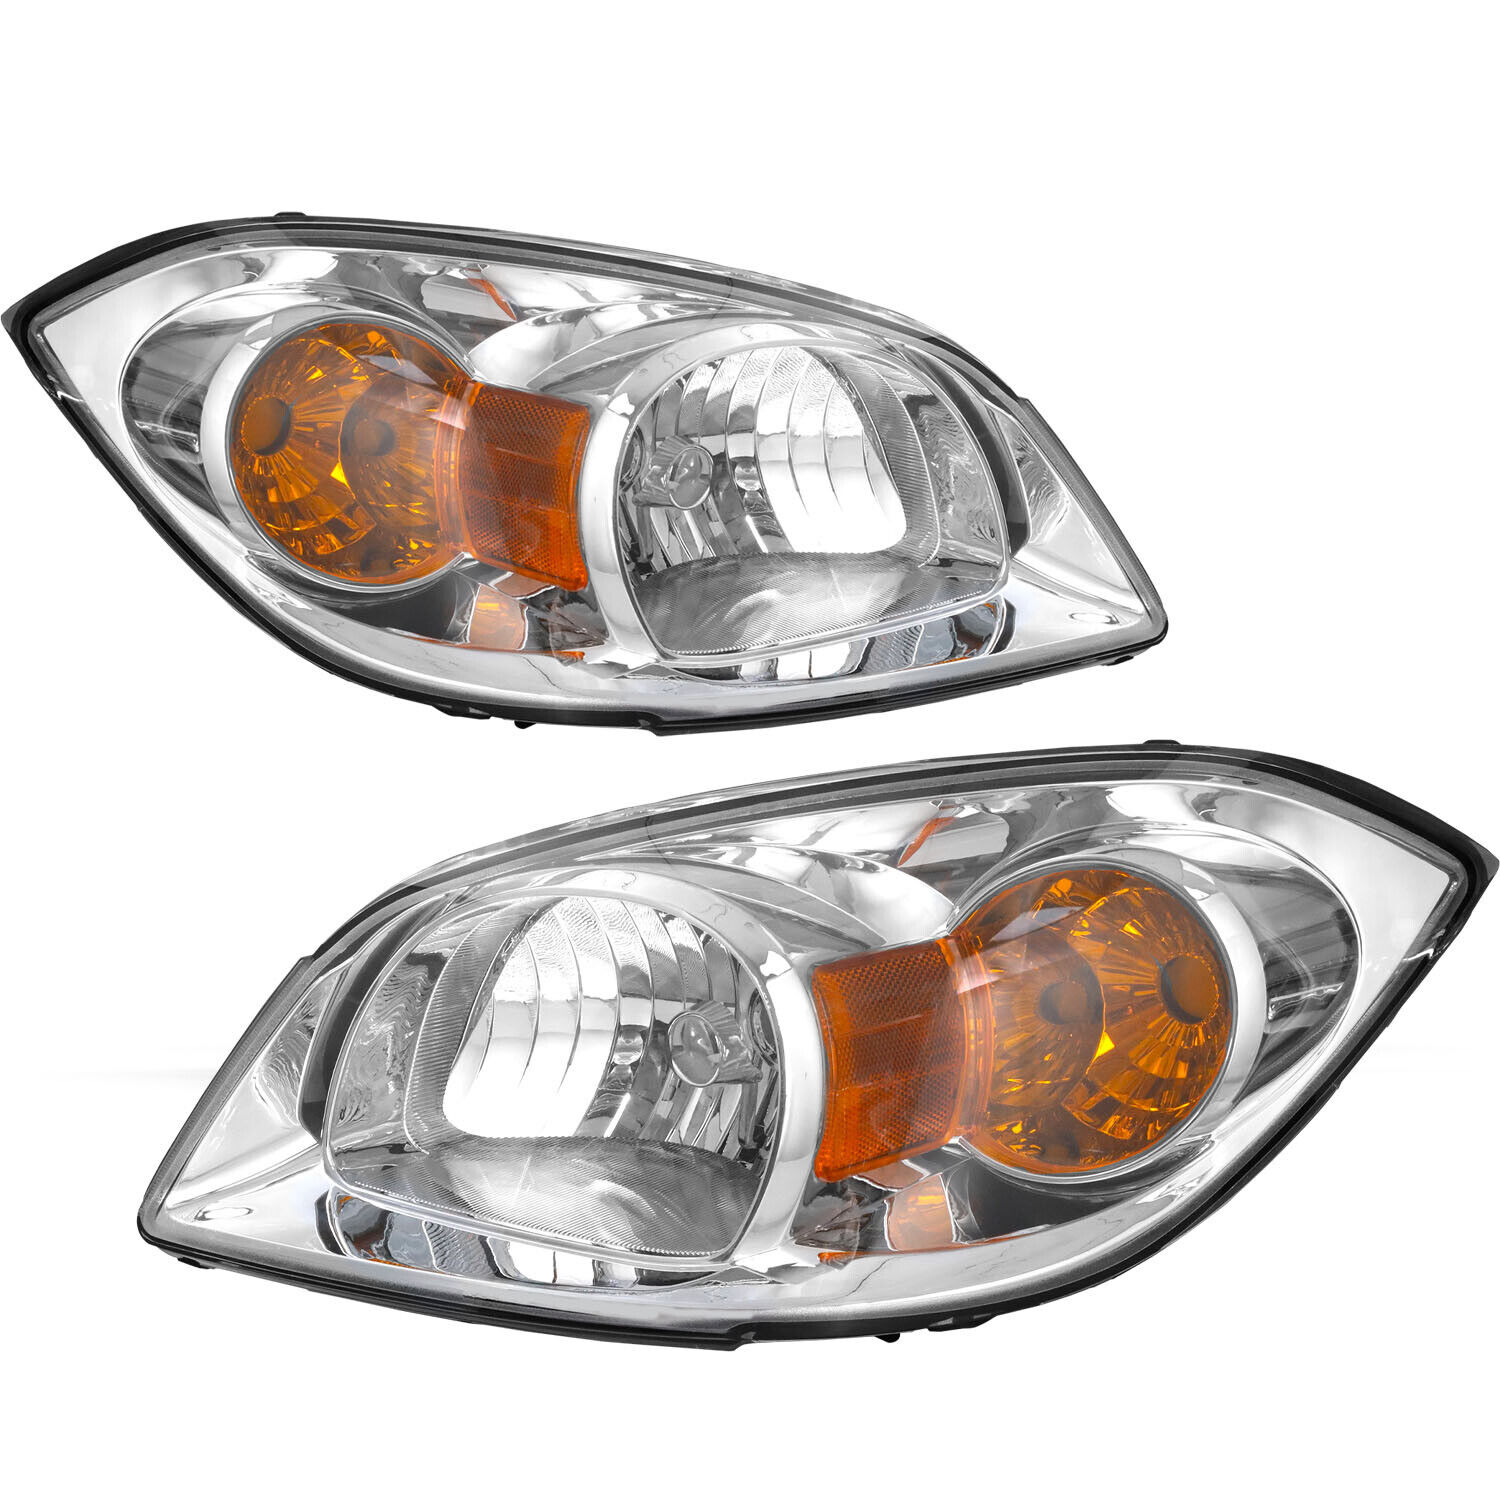 For 05-10 Chevy Cobalt 07-10 Pontiac G5 05-06 Pursuit Headlights Headlamps Sets